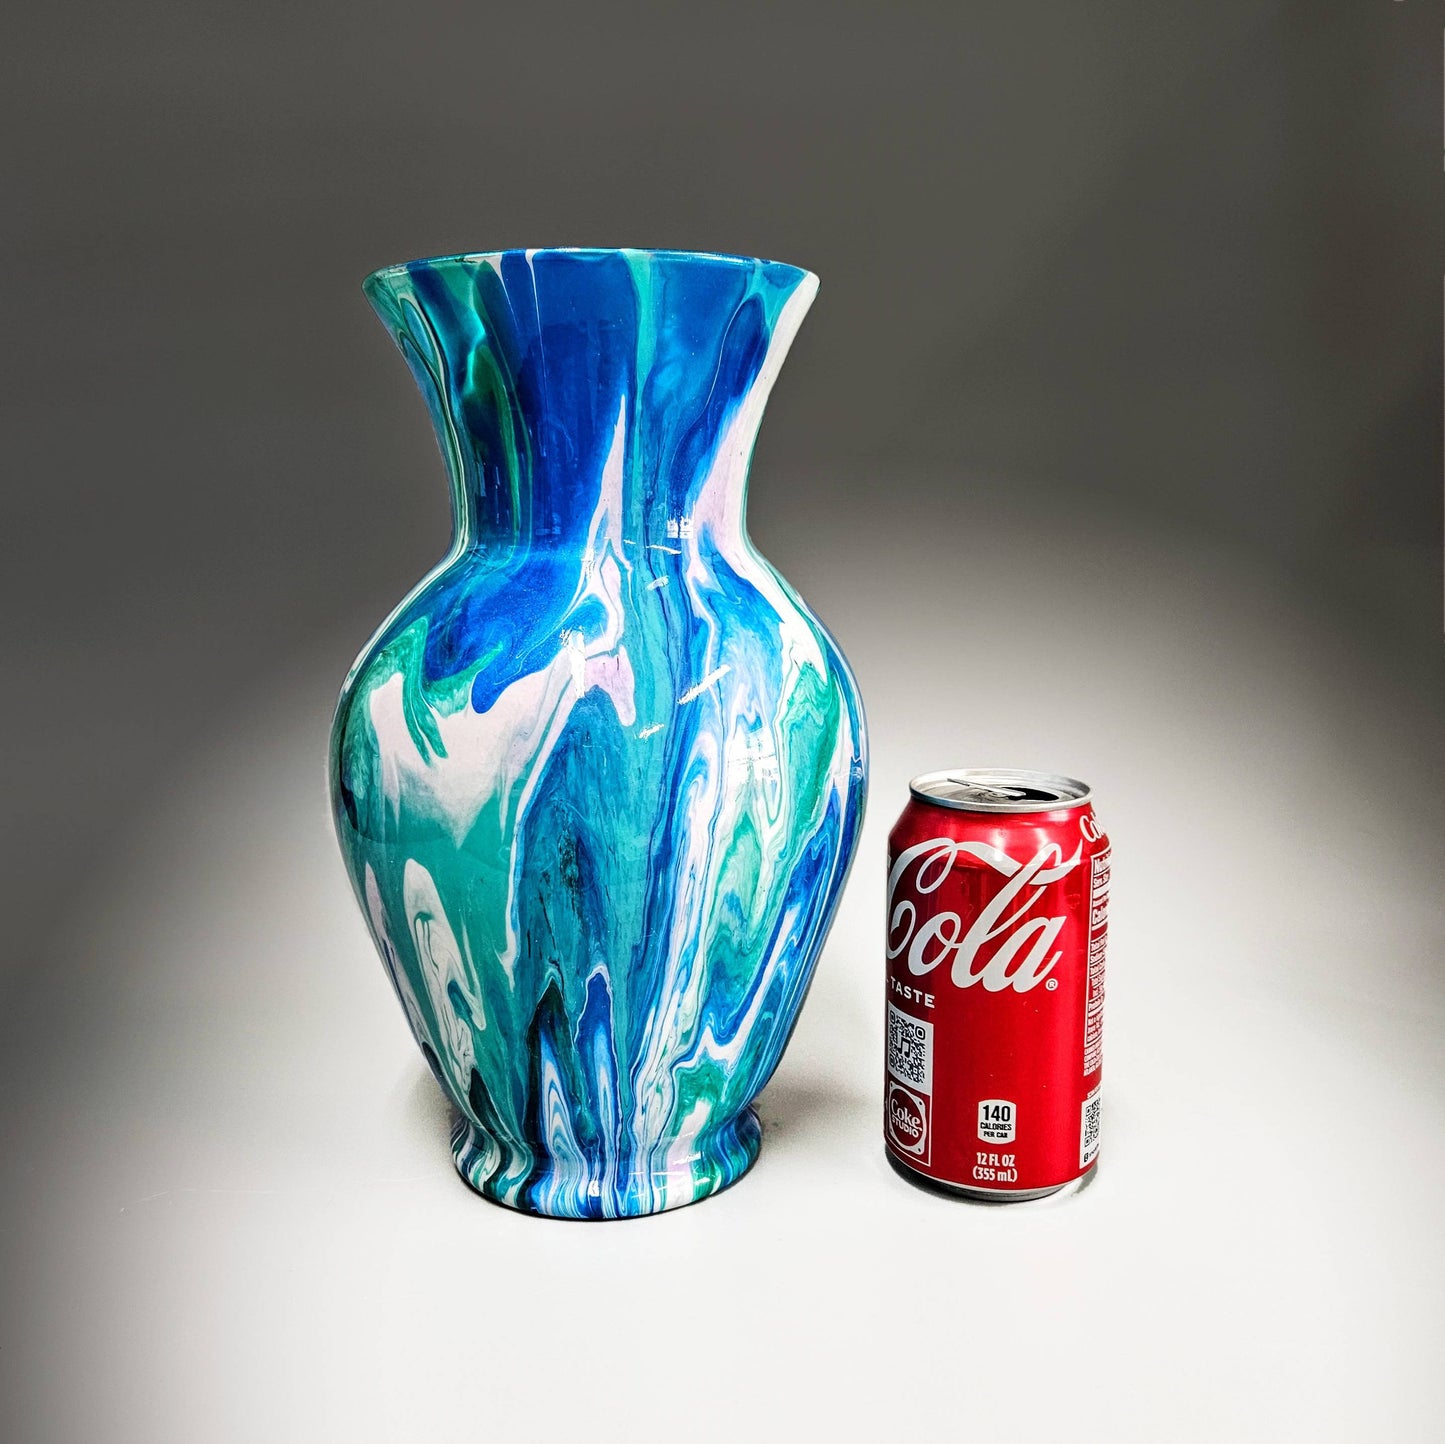 Painted Vase in Teal Cobalt Blue White